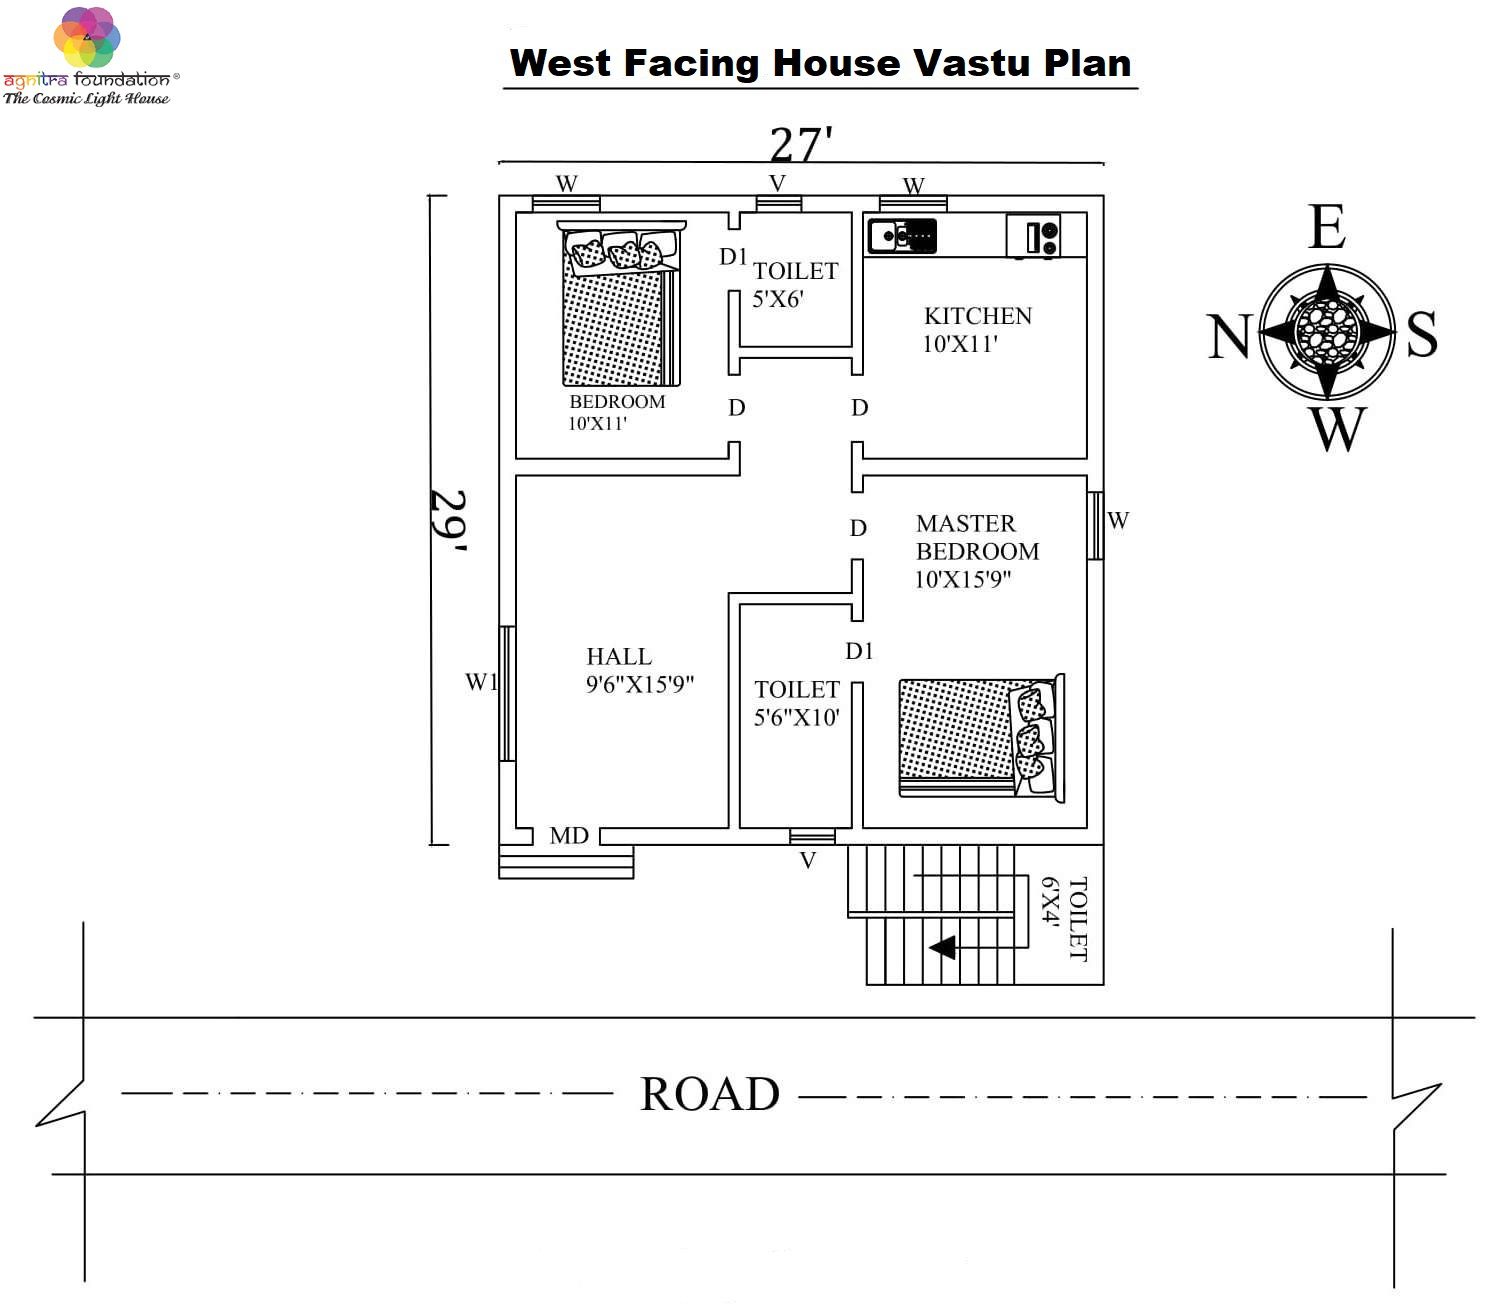 West Facing House Vastu Plan By Agnitra Foundation